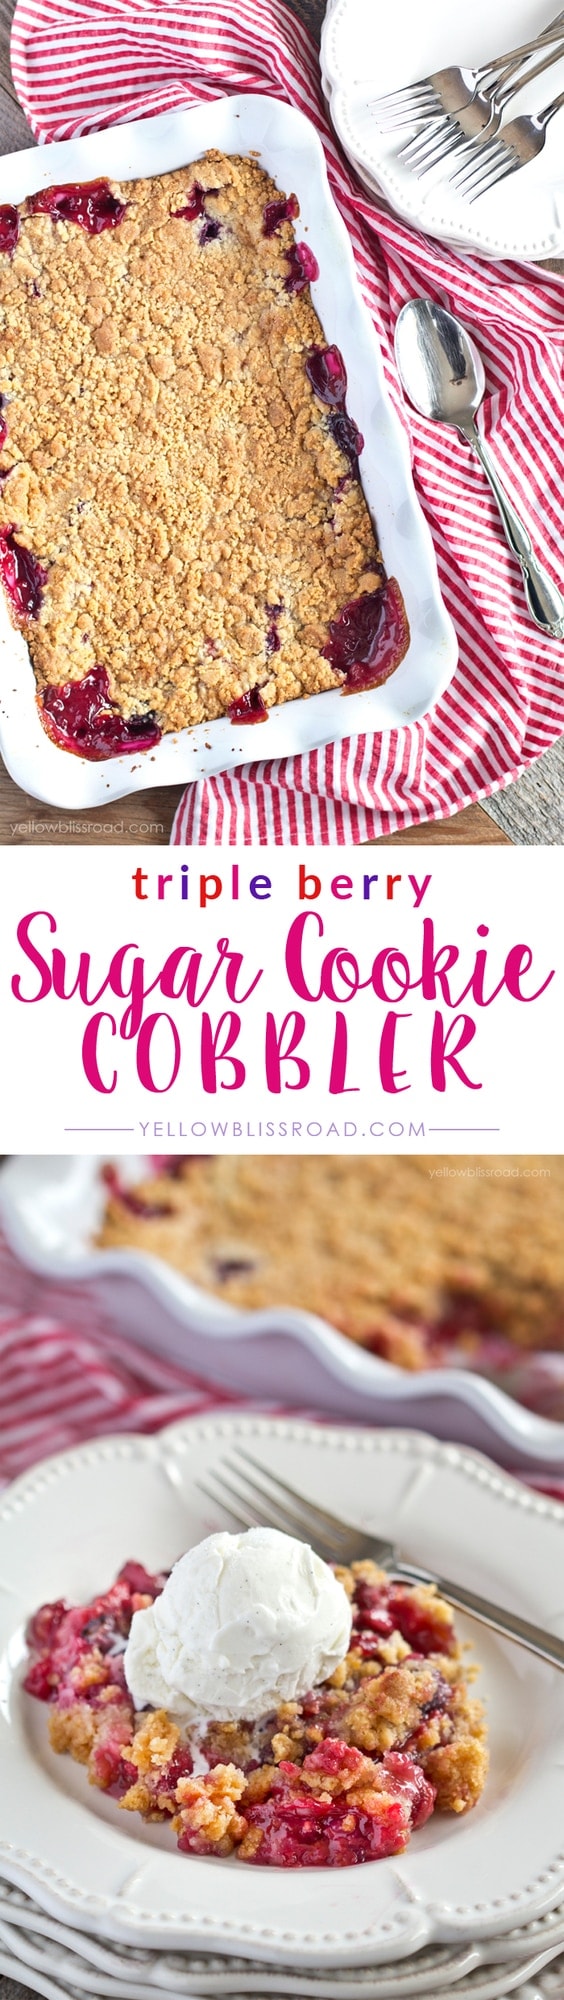 Triple Berry Sugar Cookie Cobbler with strawberries, blueberries and raspberries